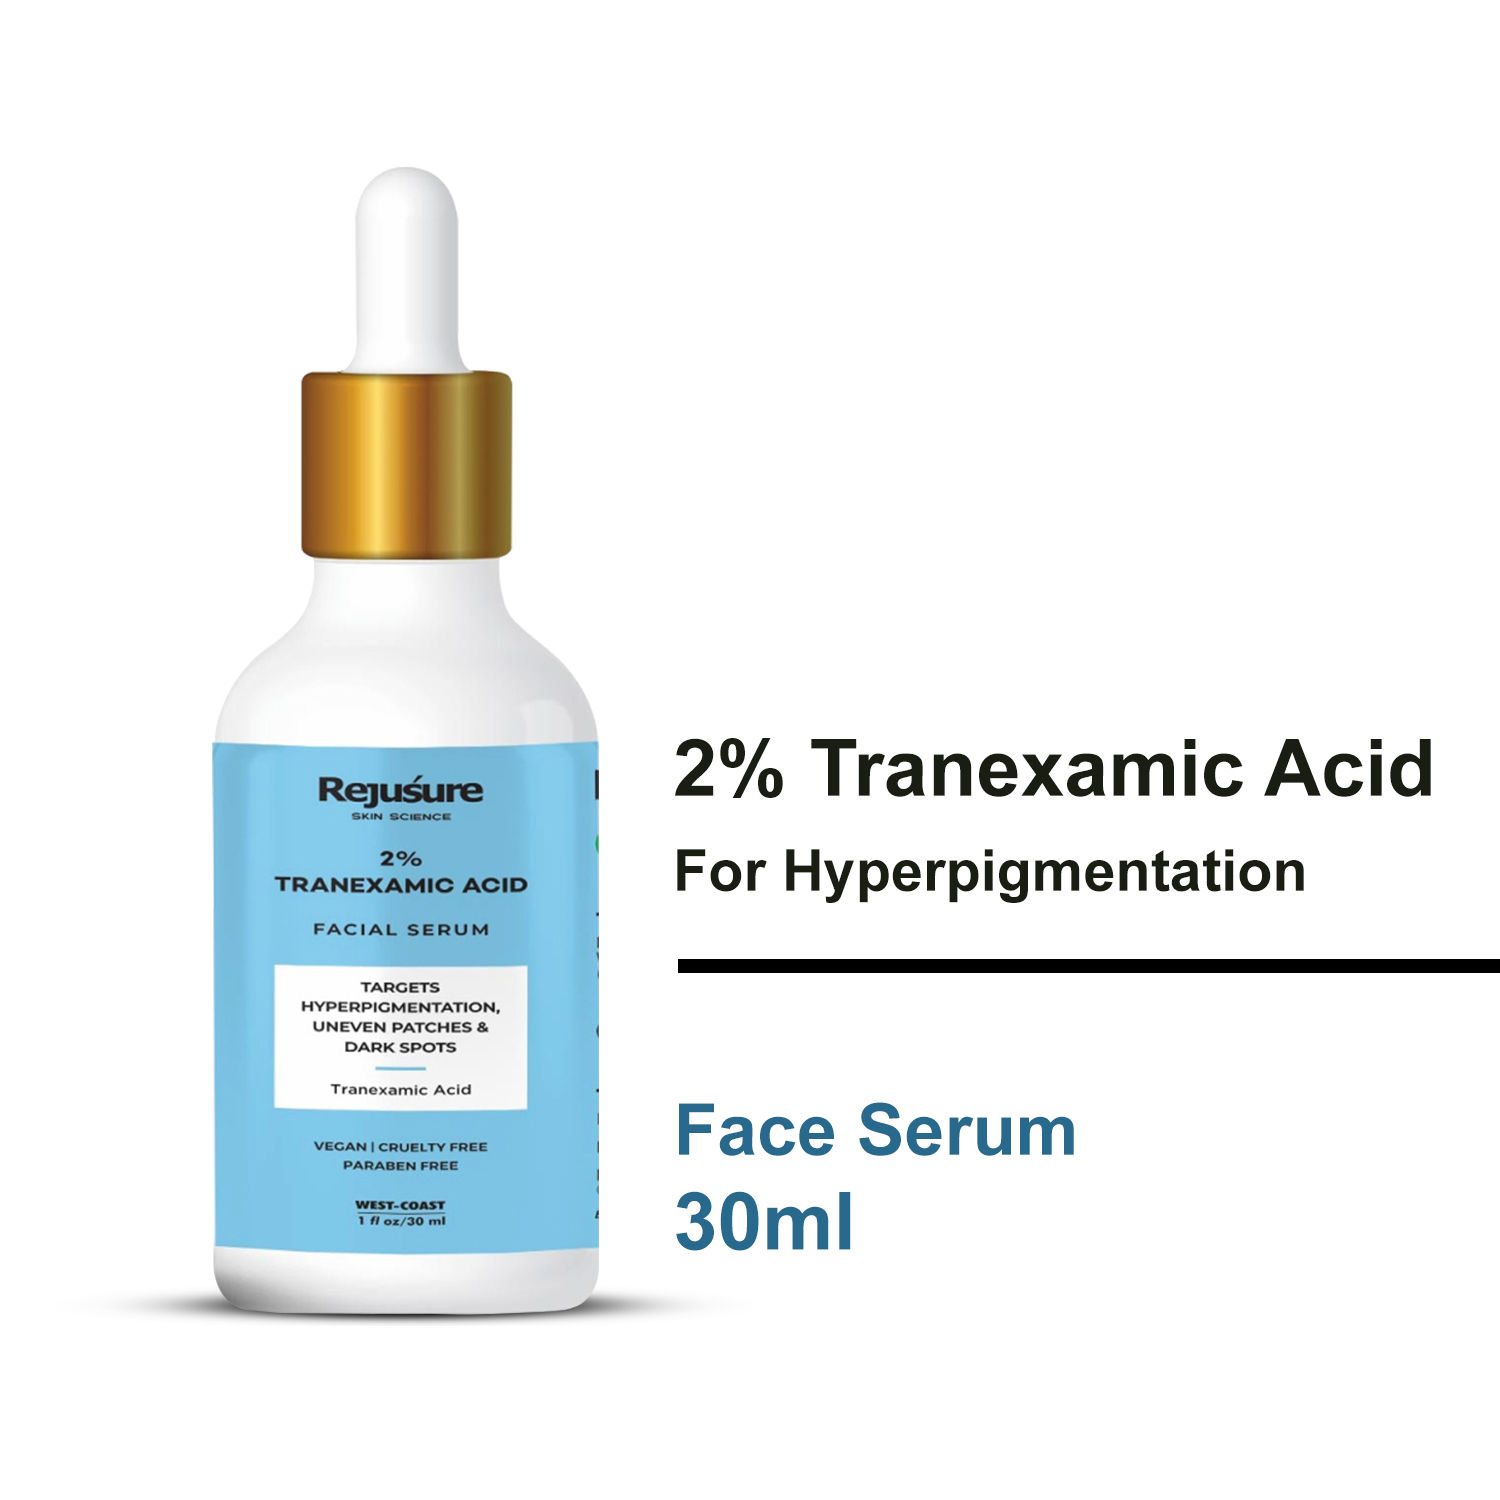 Rejusure Tranexamic Acid 2% Face Serum For Hyperpigmentation, Uneven Patches & Dark Spots